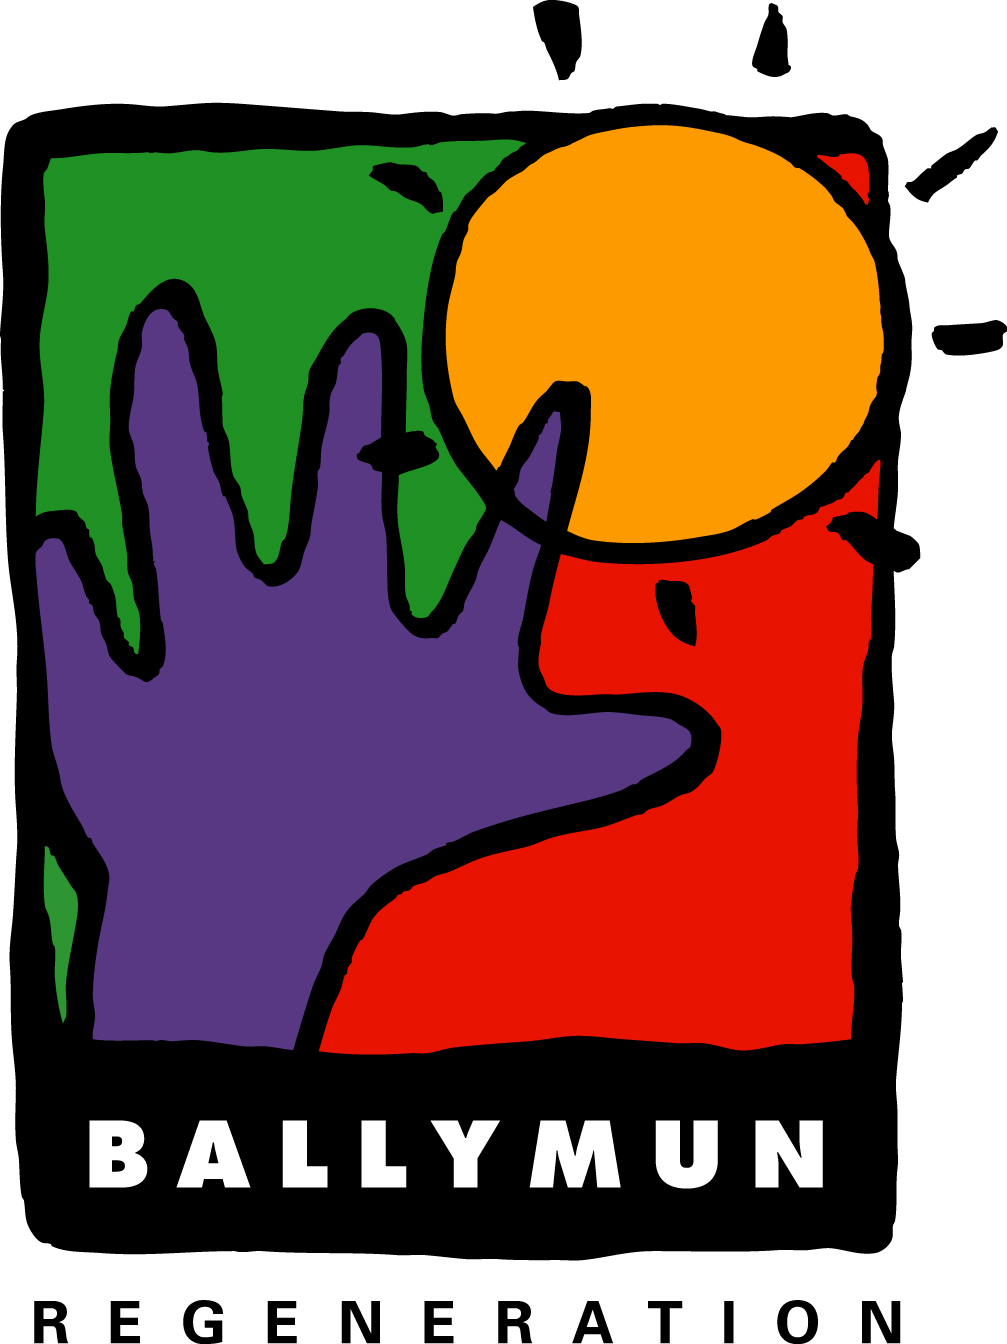 Ballymun Regeneration Ltd